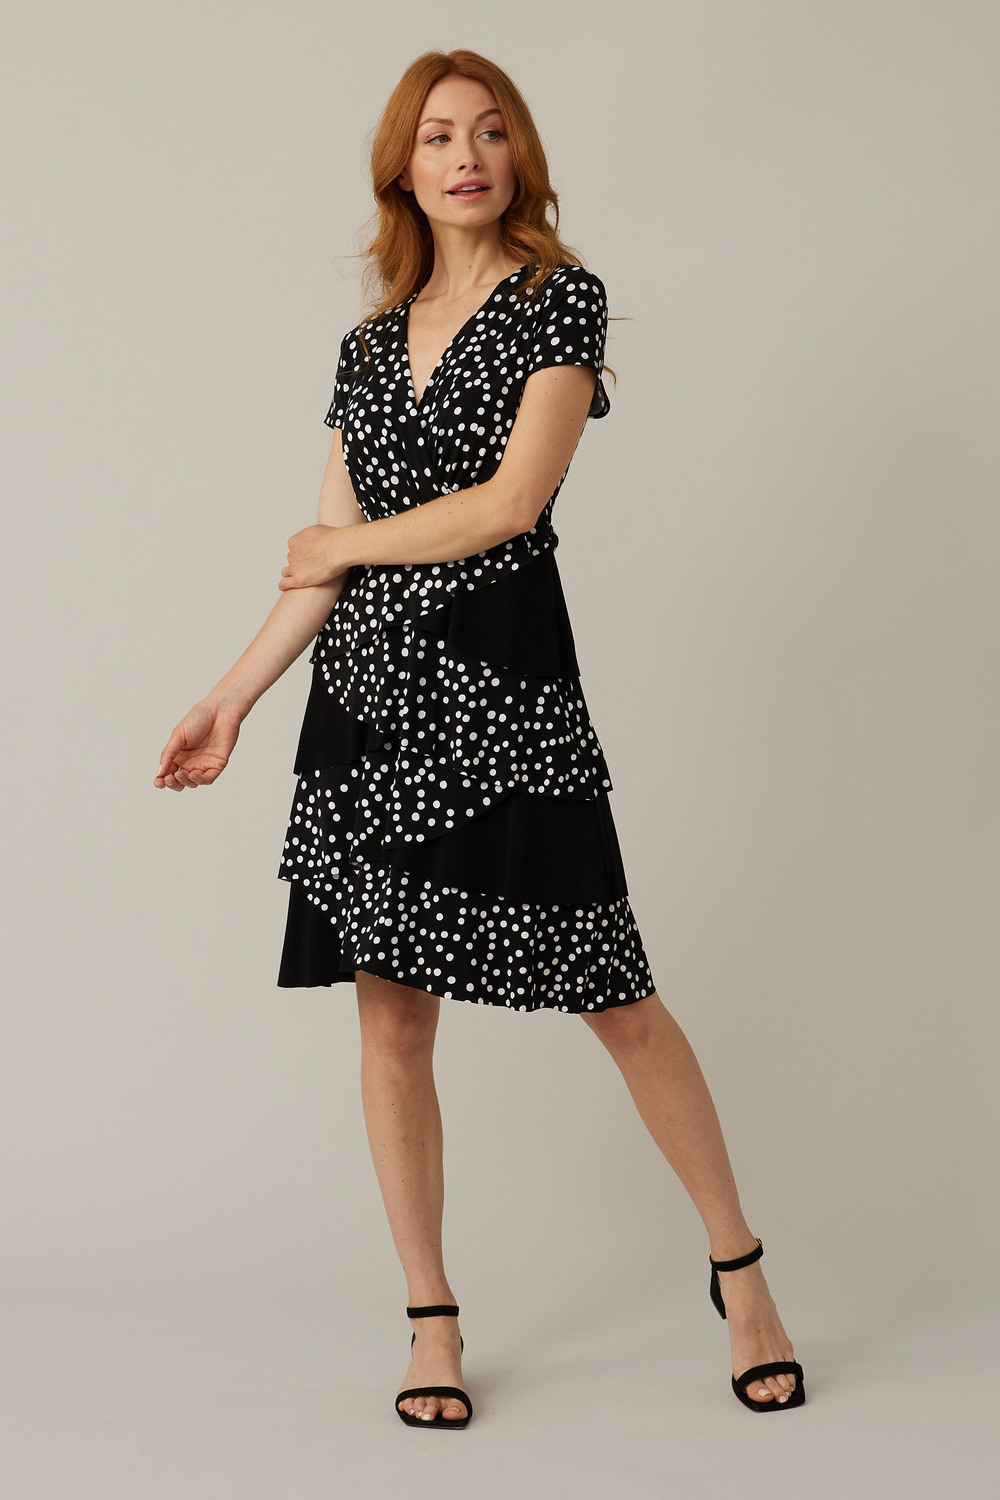 Joseph Ribkoff Printed Dress Style 221174. Black/vanilla